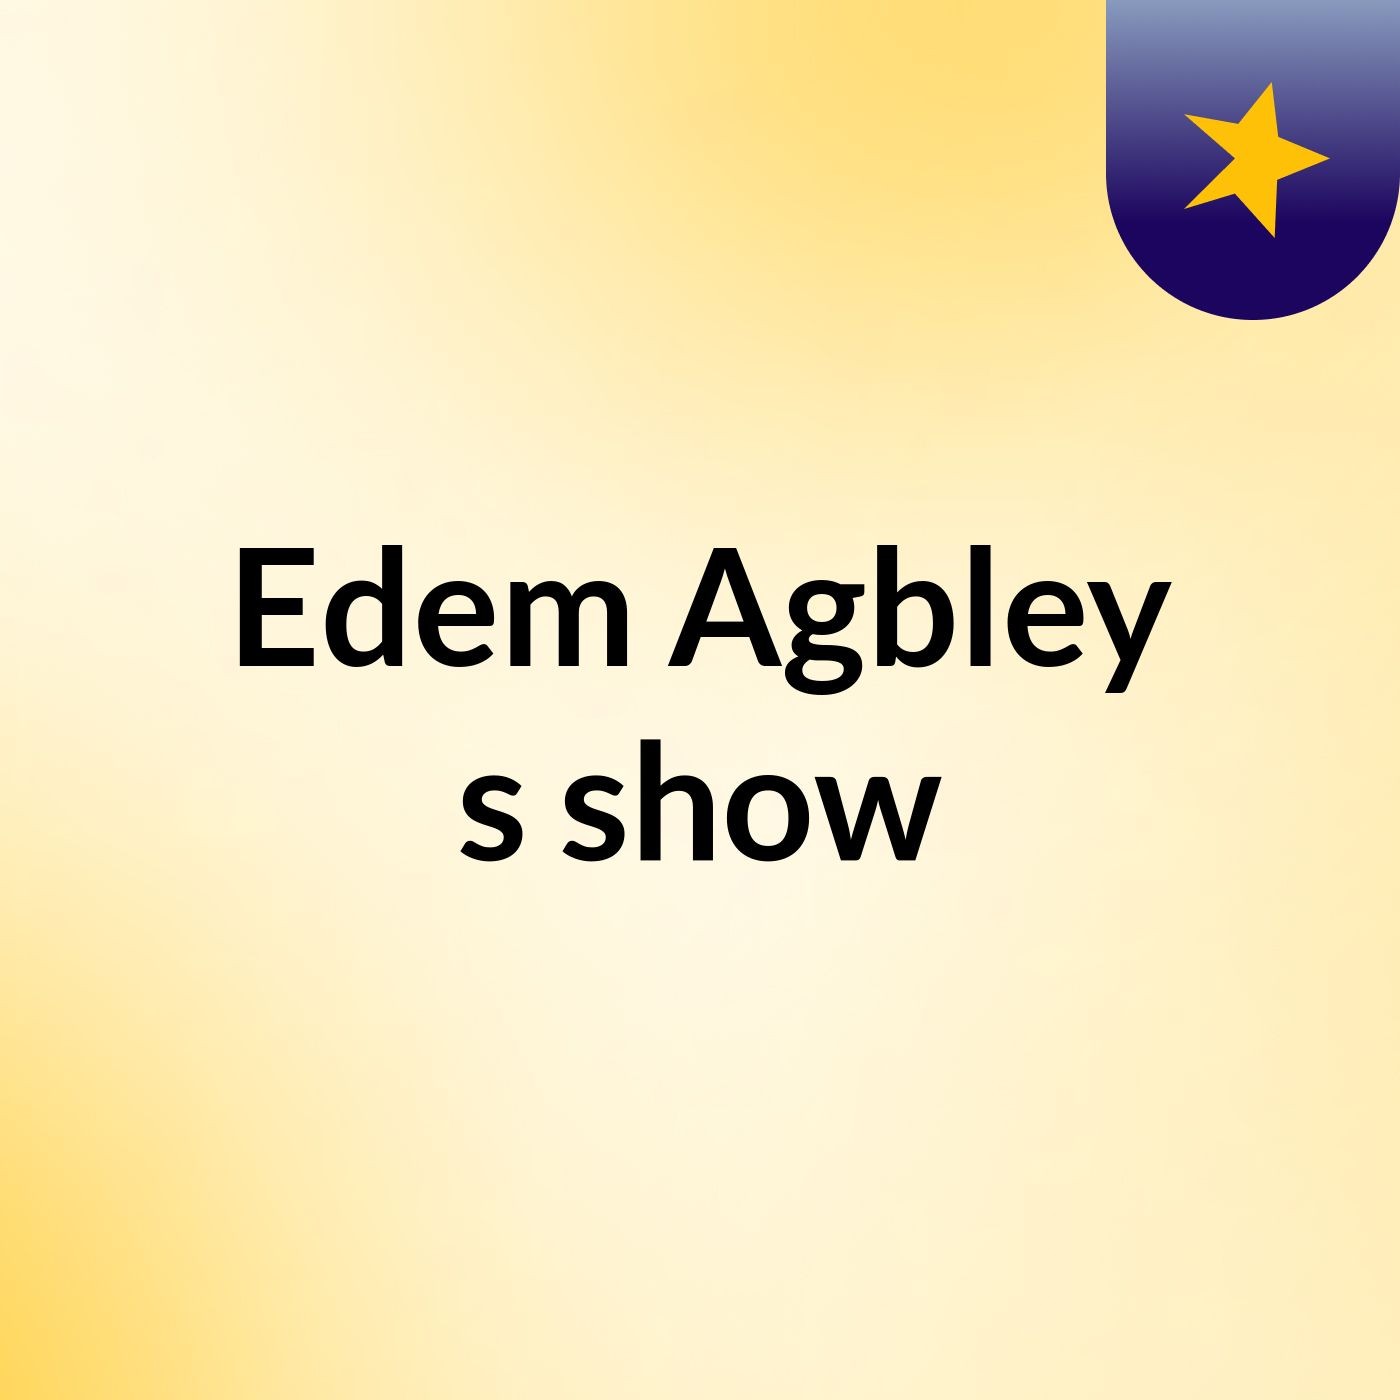 Edem Agbley's show